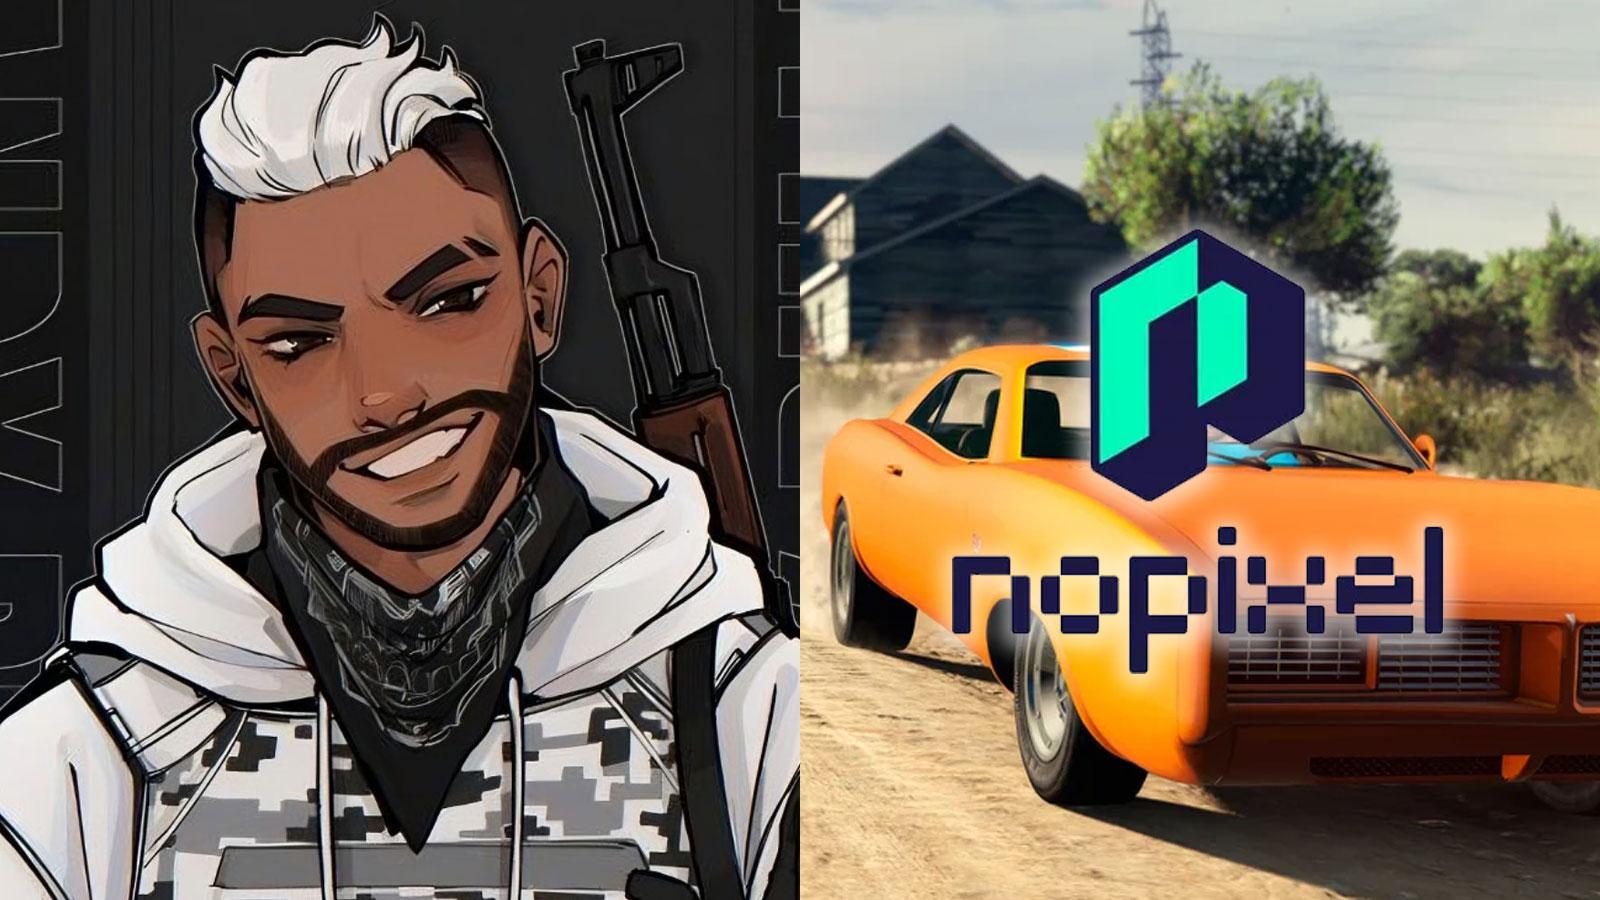 RatedEpicz avatar and GTA NoPixel logo